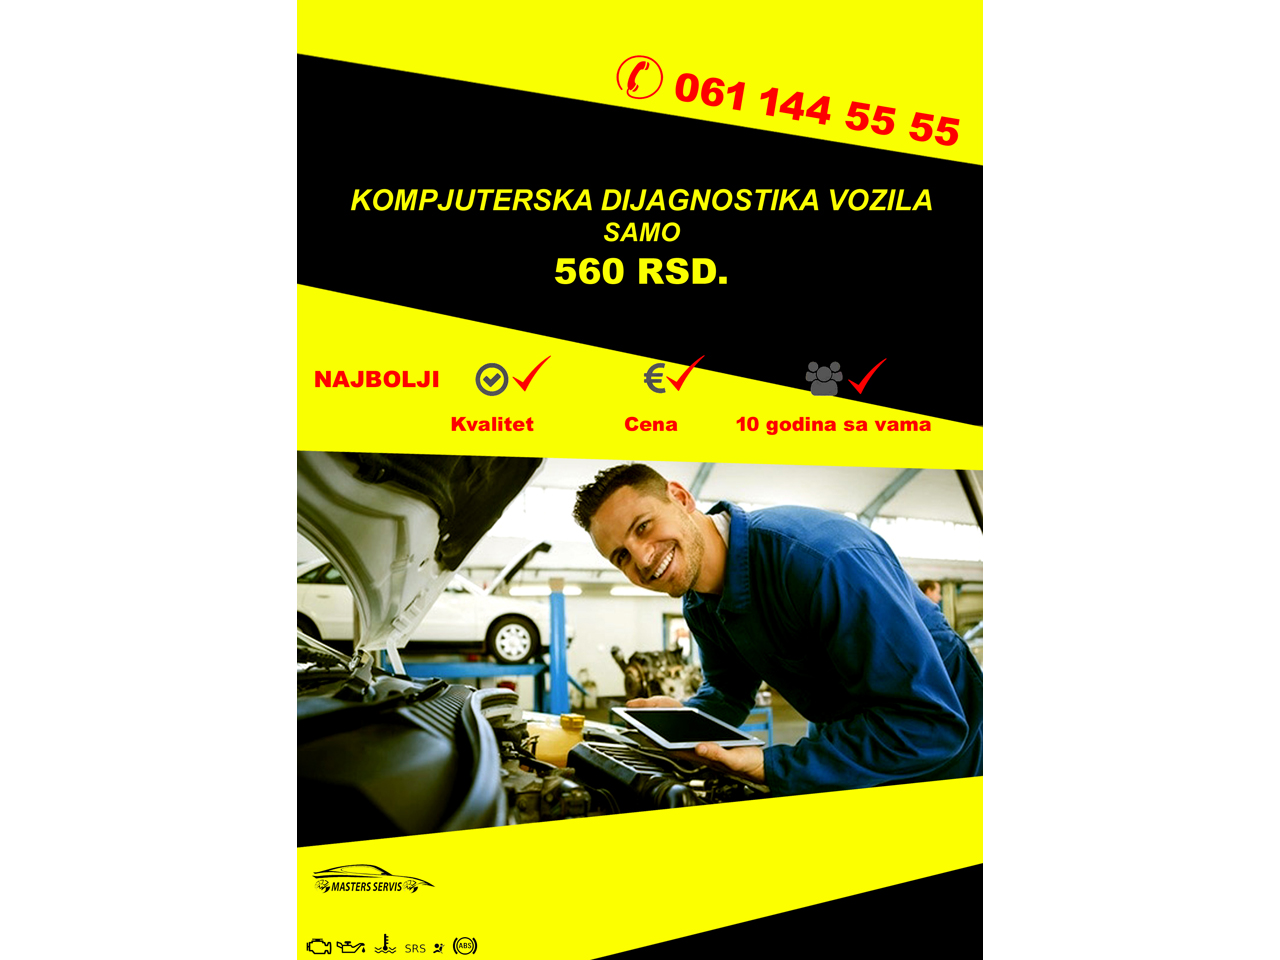 MASTERS SERVICE Car air-conditioning Belgrade - Photo 7